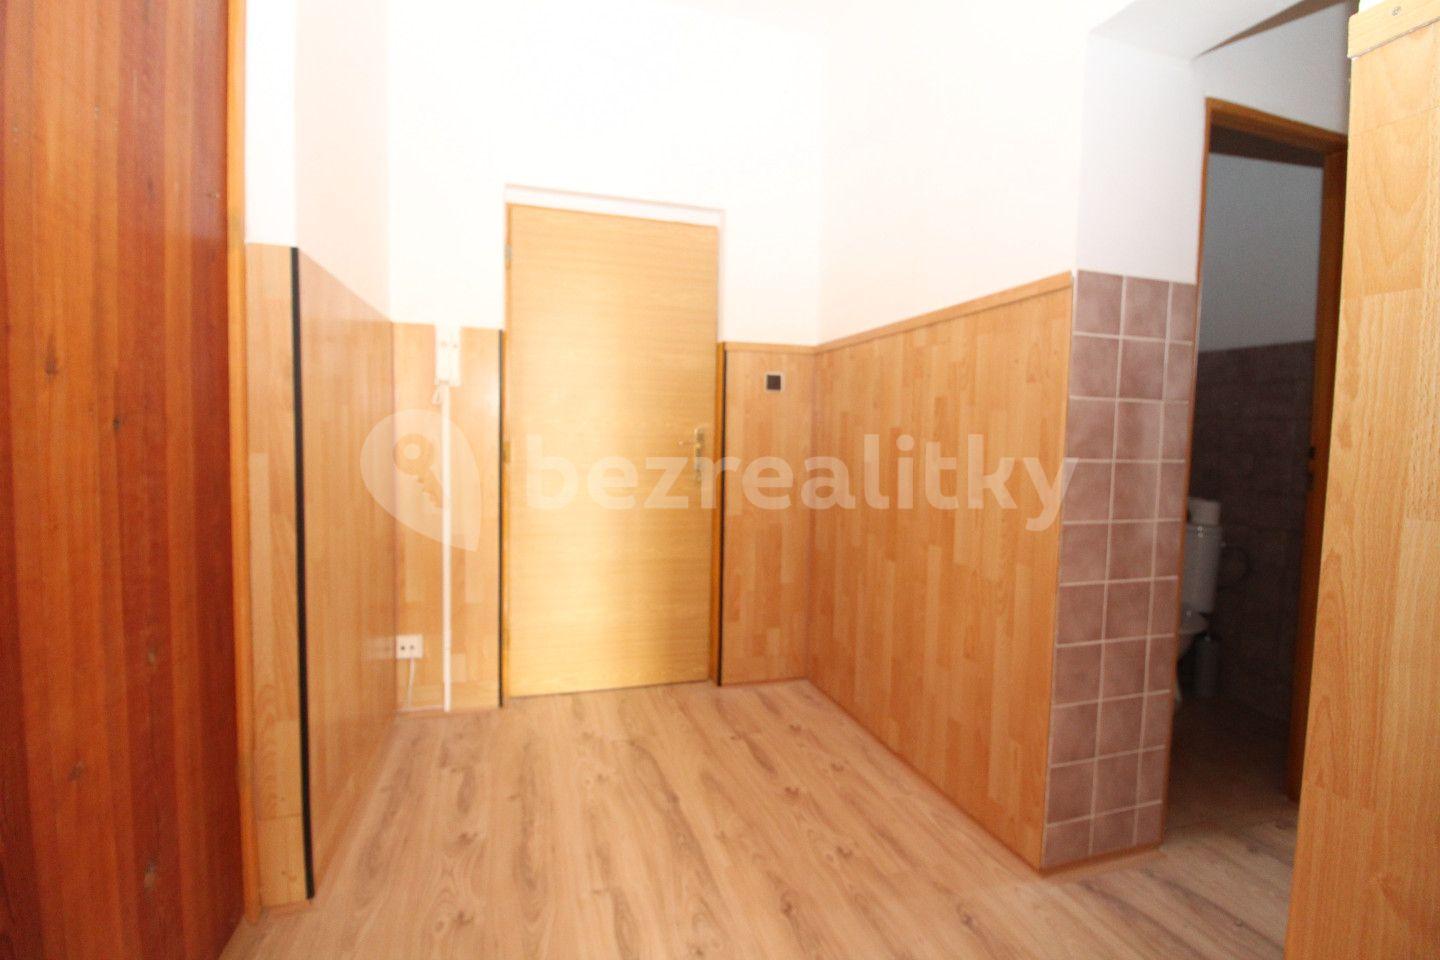 4 bedroom flat for sale, 118 m², Gen. Svobody, Nový Bor, Liberecký Region